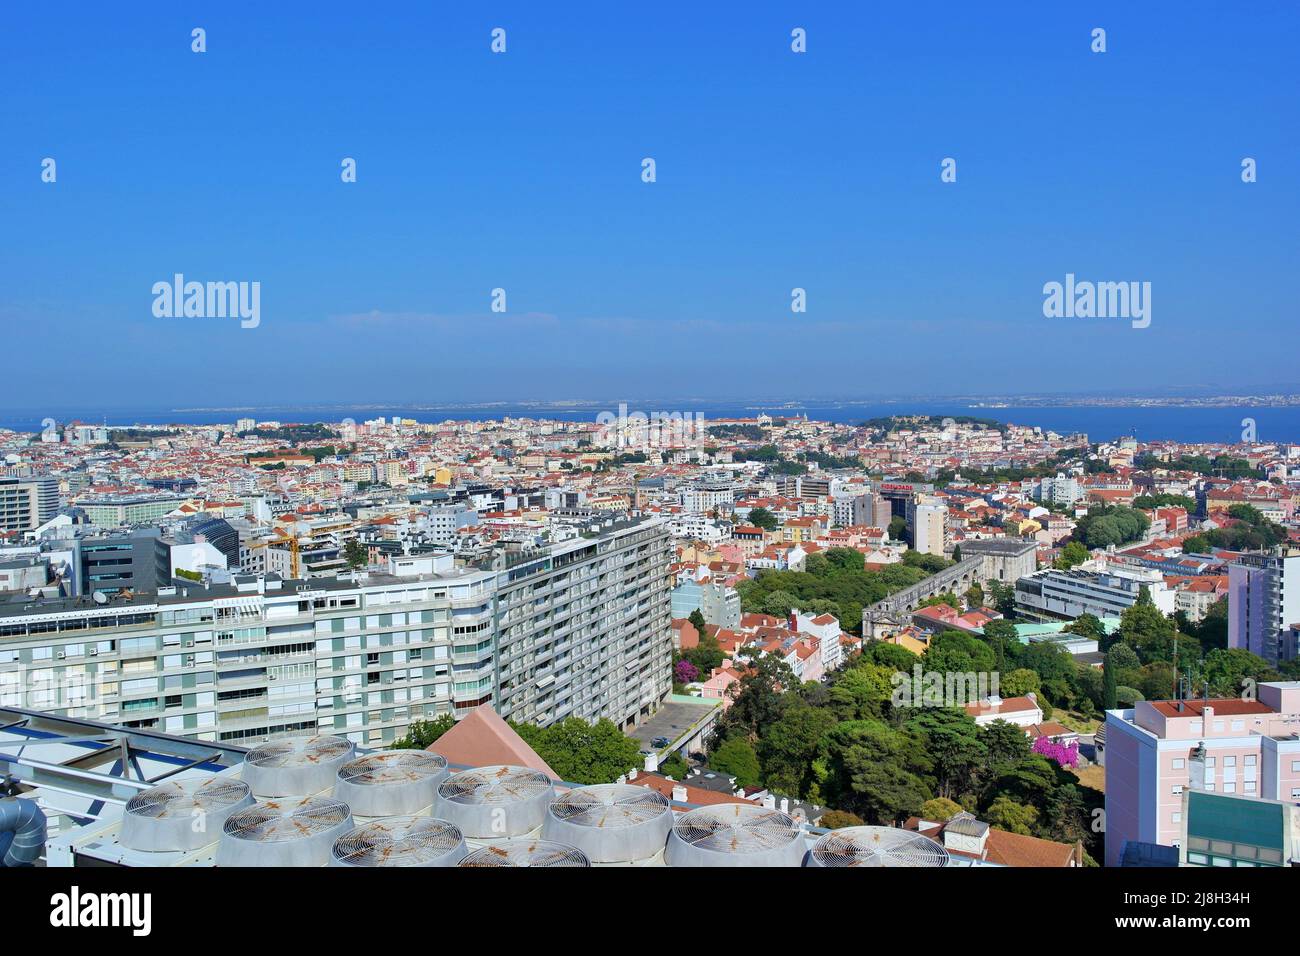 The capital city of Portugal, Lisbon Stock Photo